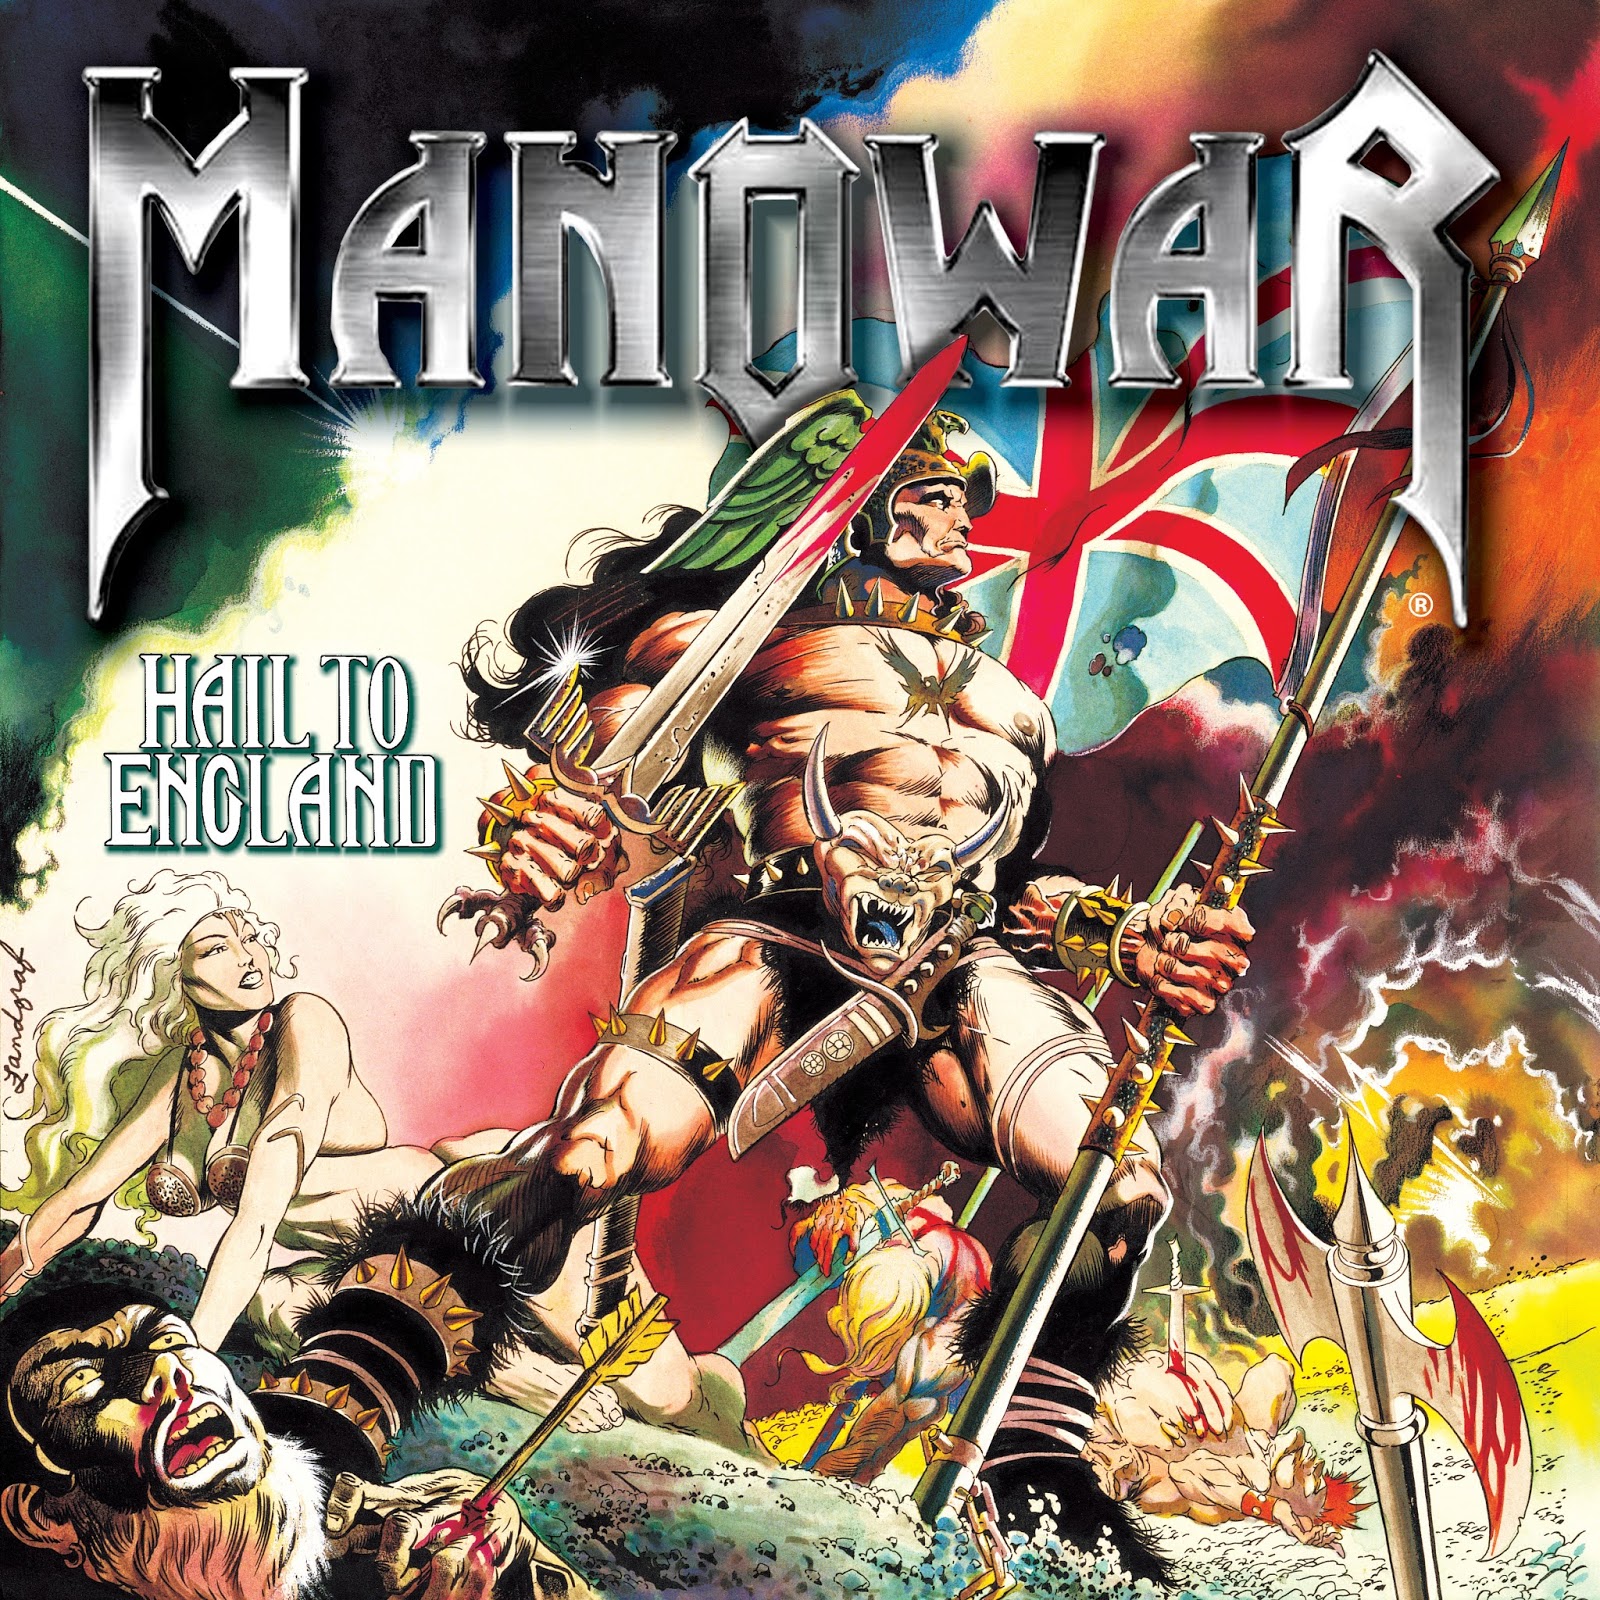 Manowar united. Постеры группы Manowar. Группа Manowar обложки. Manowar Band 1984. Альбомы группы мановар.